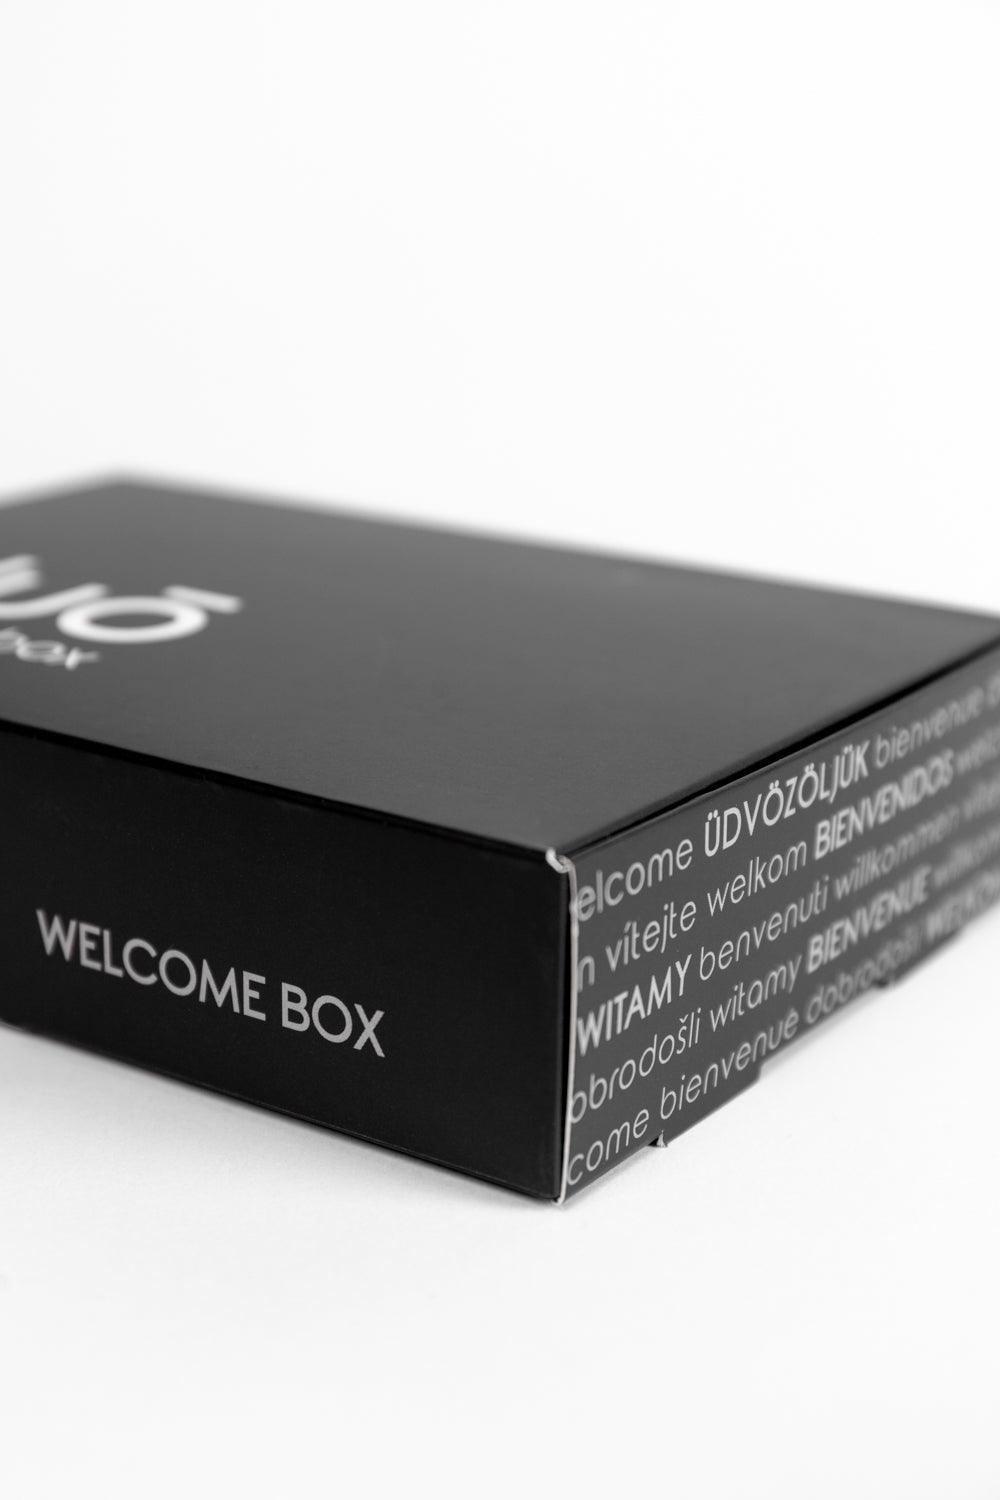 WELCOME BOX 4